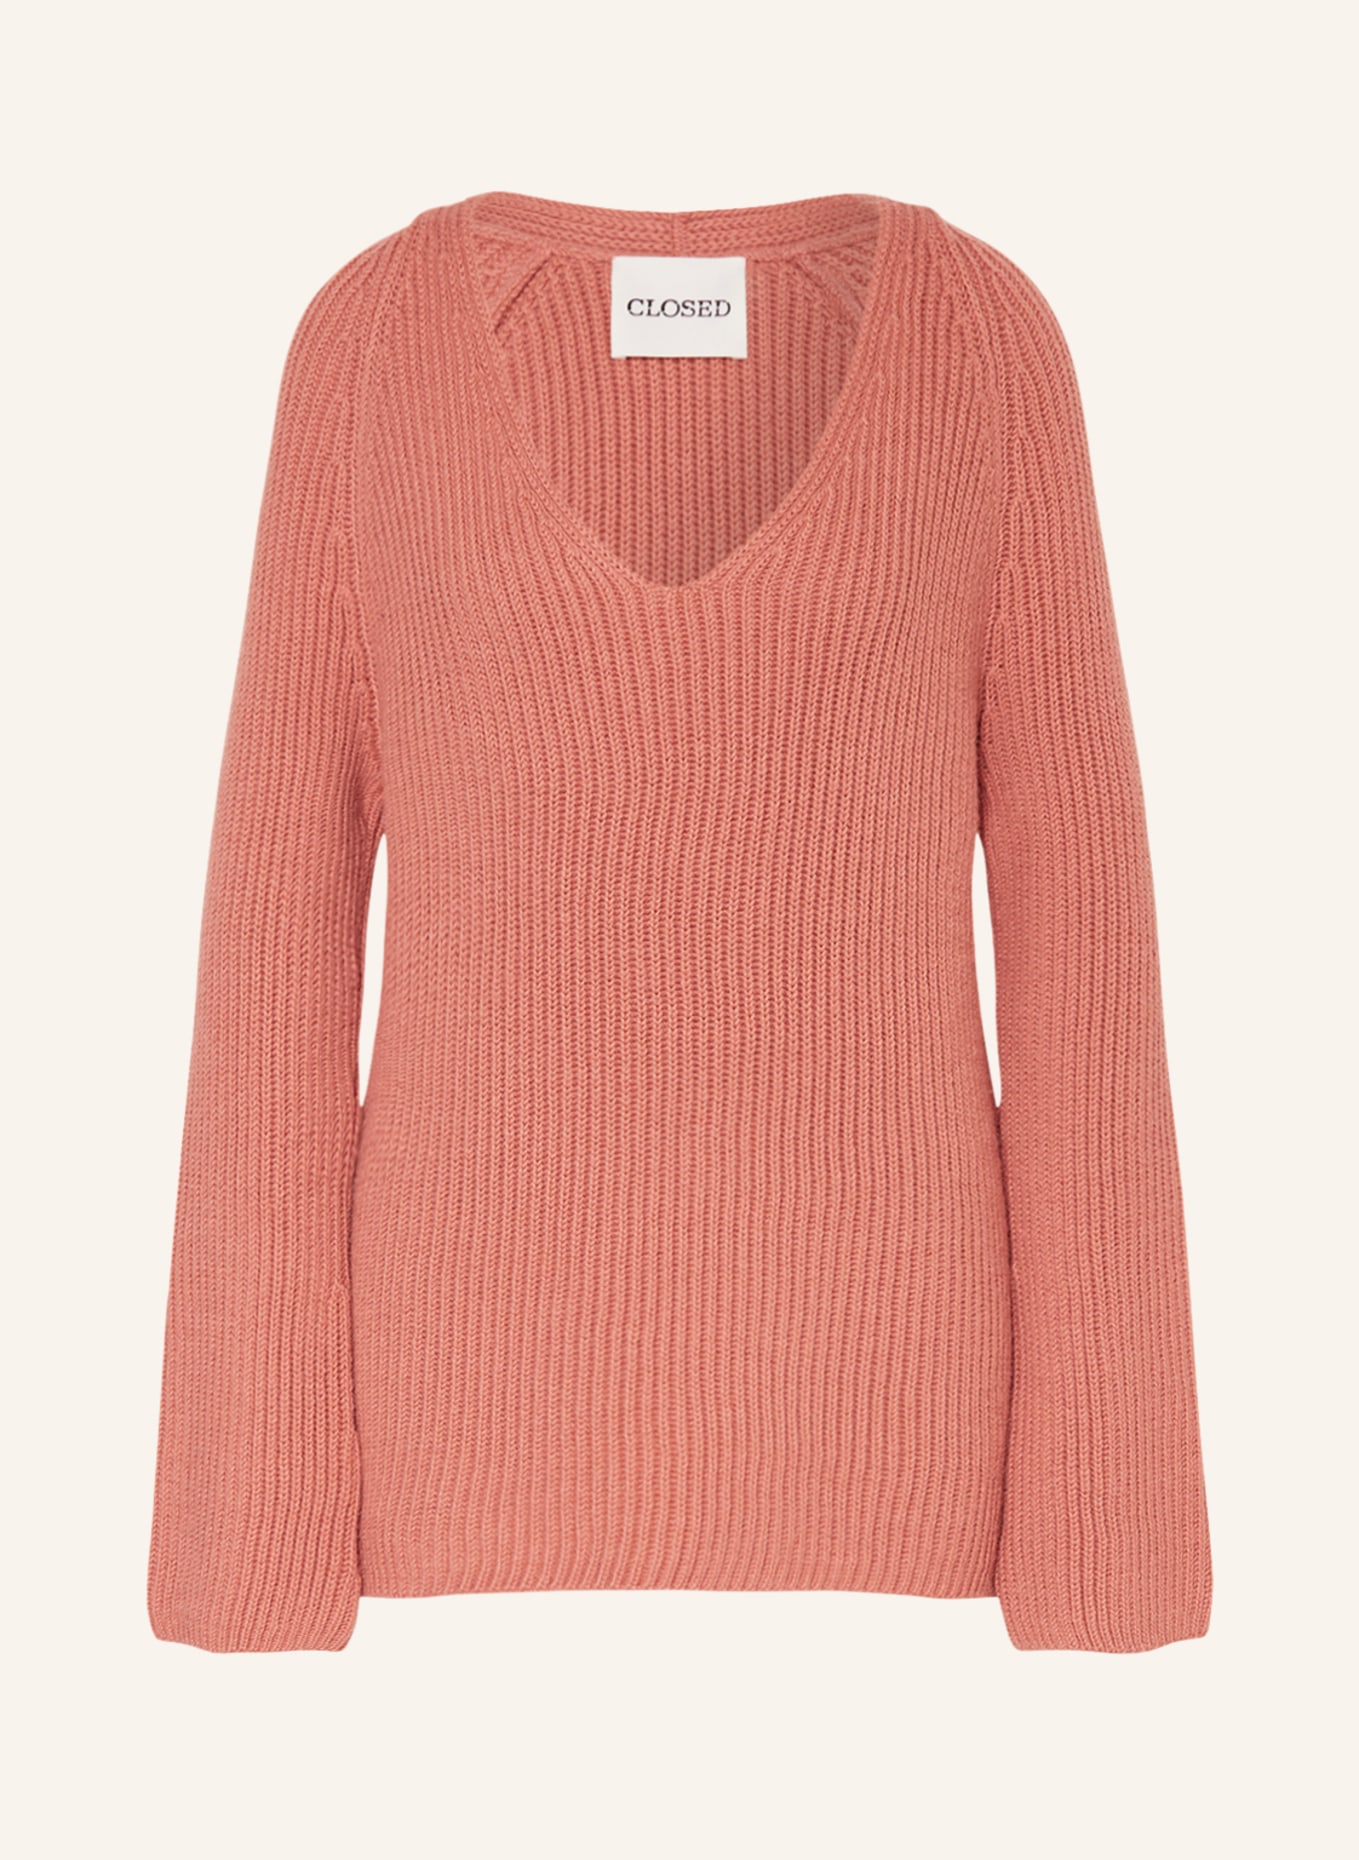 CLOSED Pullover mit Alpaka, Farbe: ROSÉ (Bild 1)